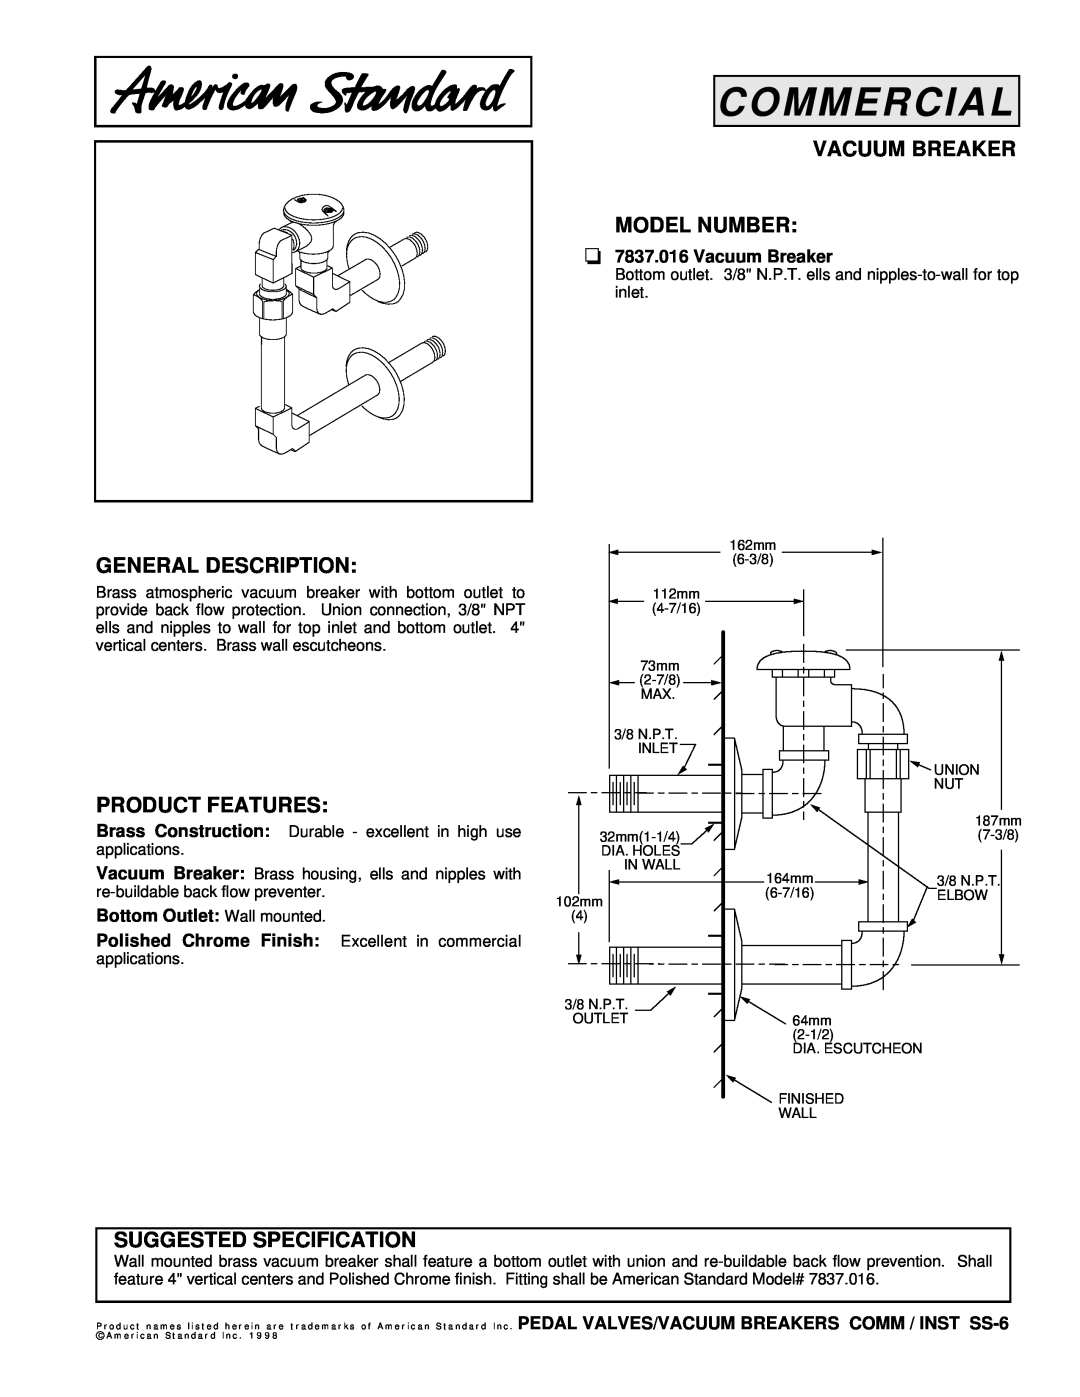 American Standard 7837.016 manual Commercial, Vacuum Breaker Model Number, General Description, Product Features 